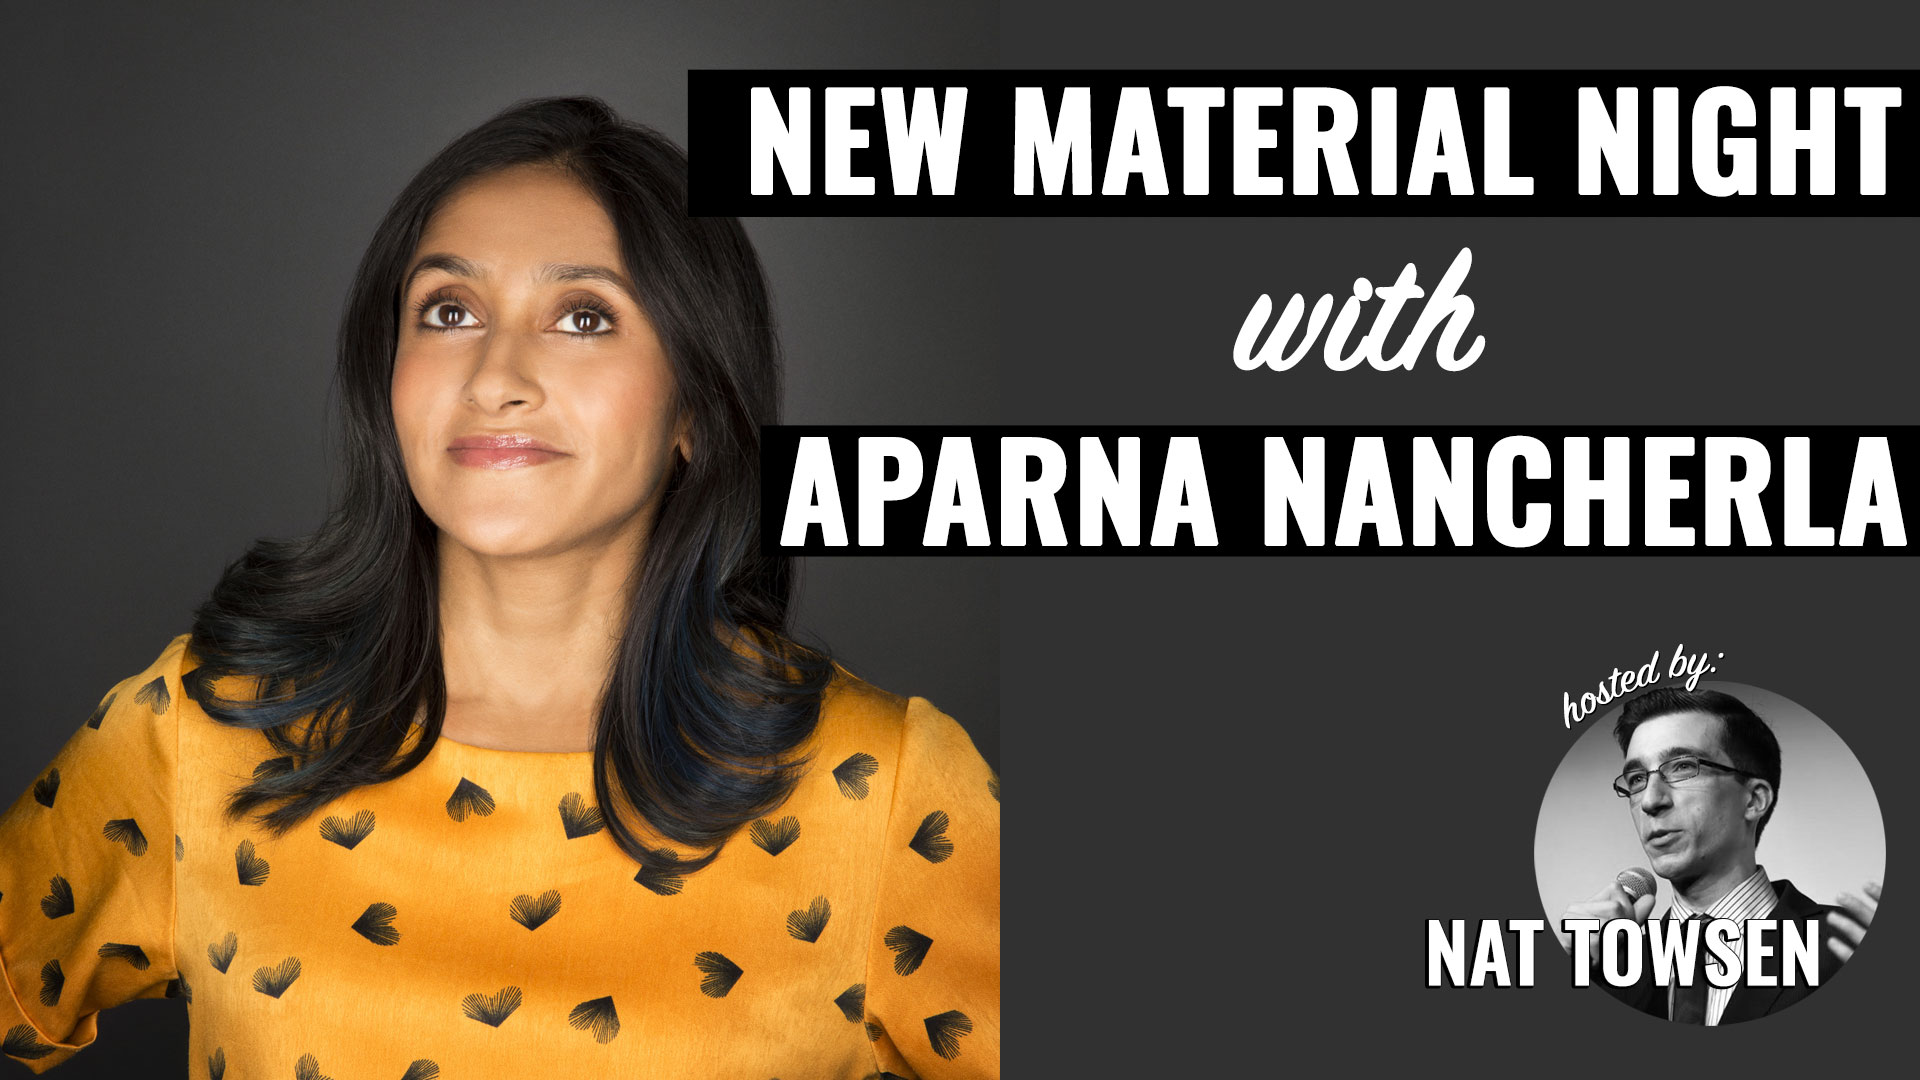 New Material Night with Aparna Nancherla & Nat Towsen